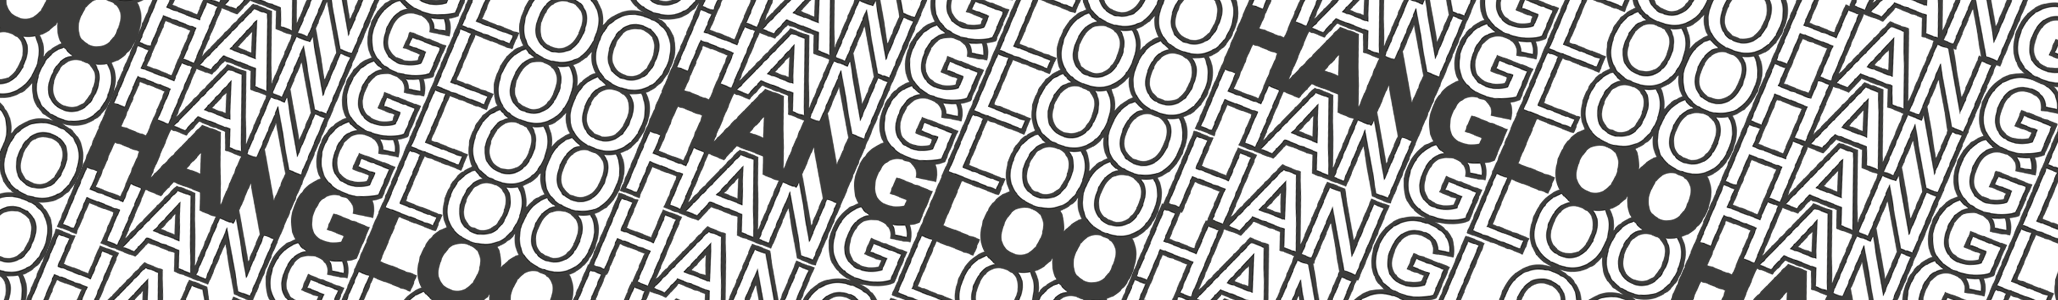 hangloo logo als Texttrenner